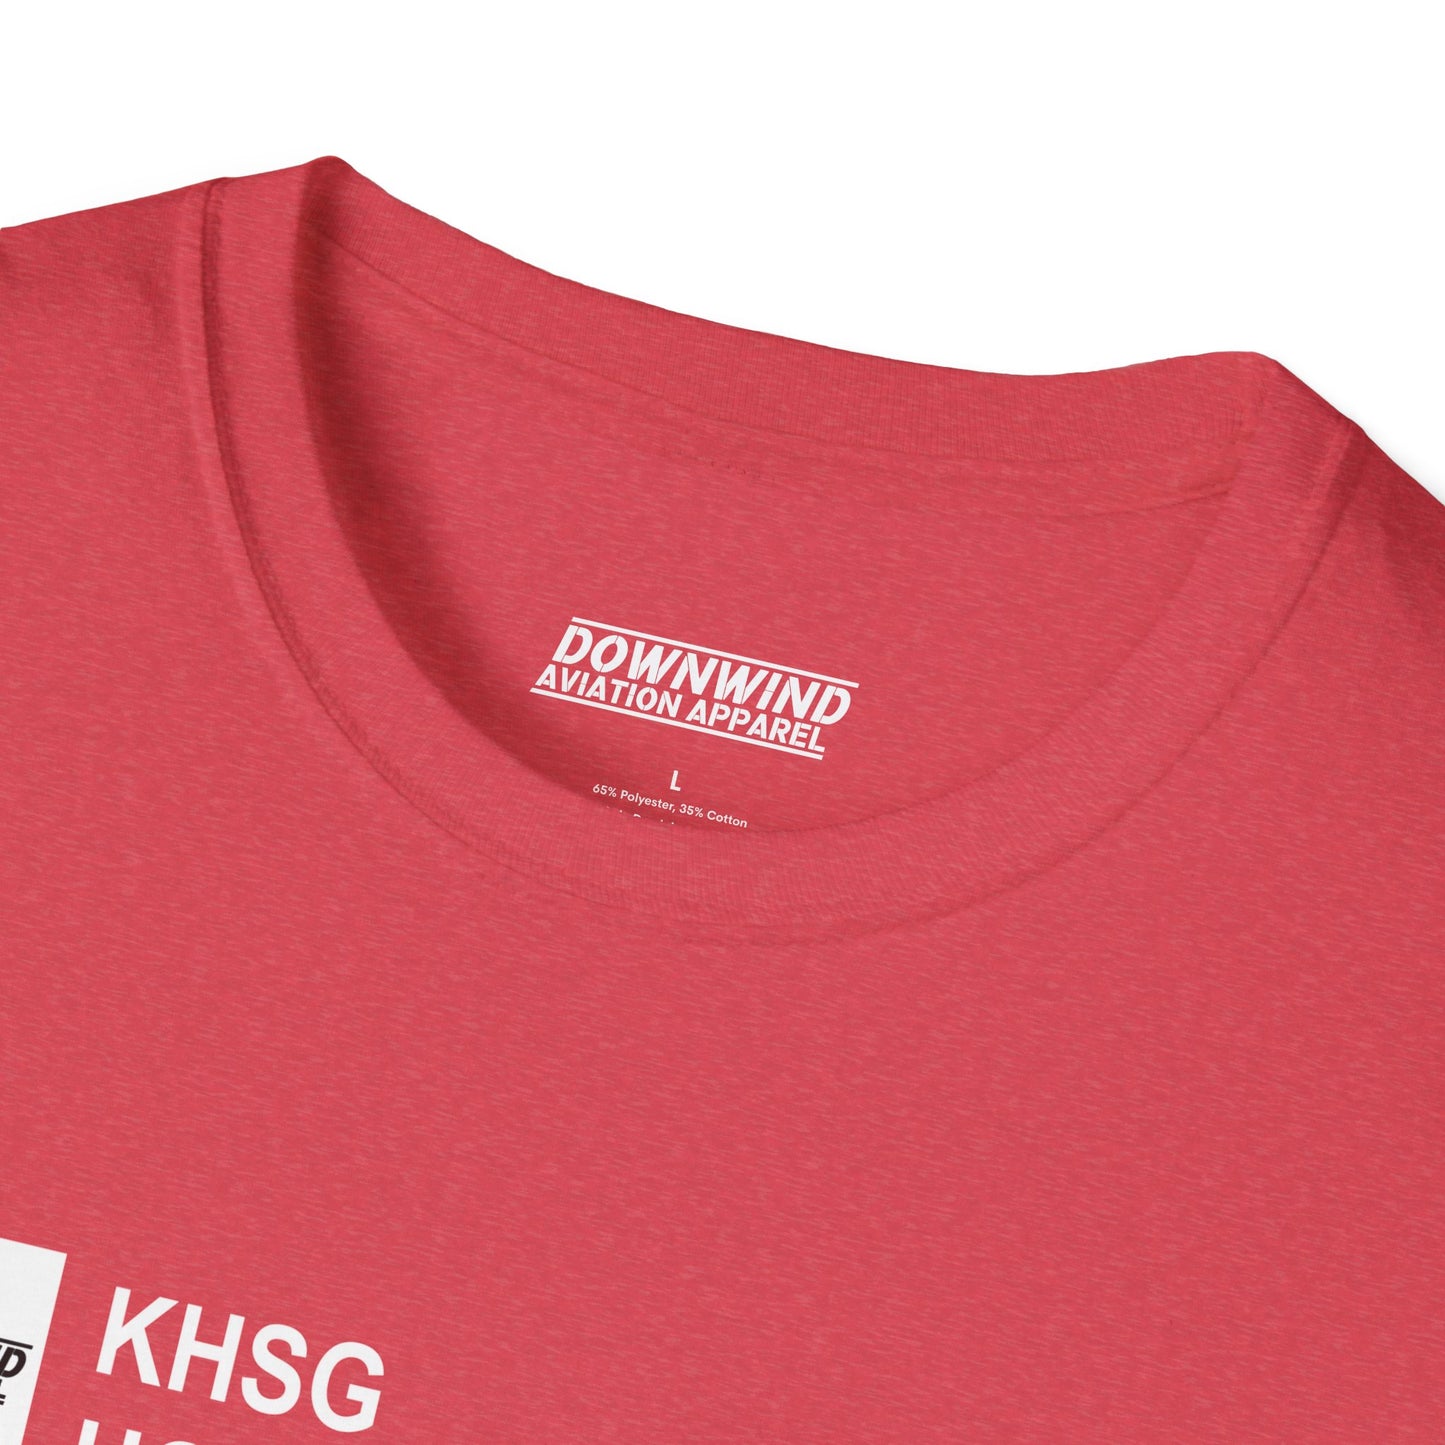 KHSG / Hot Springs County Shirt